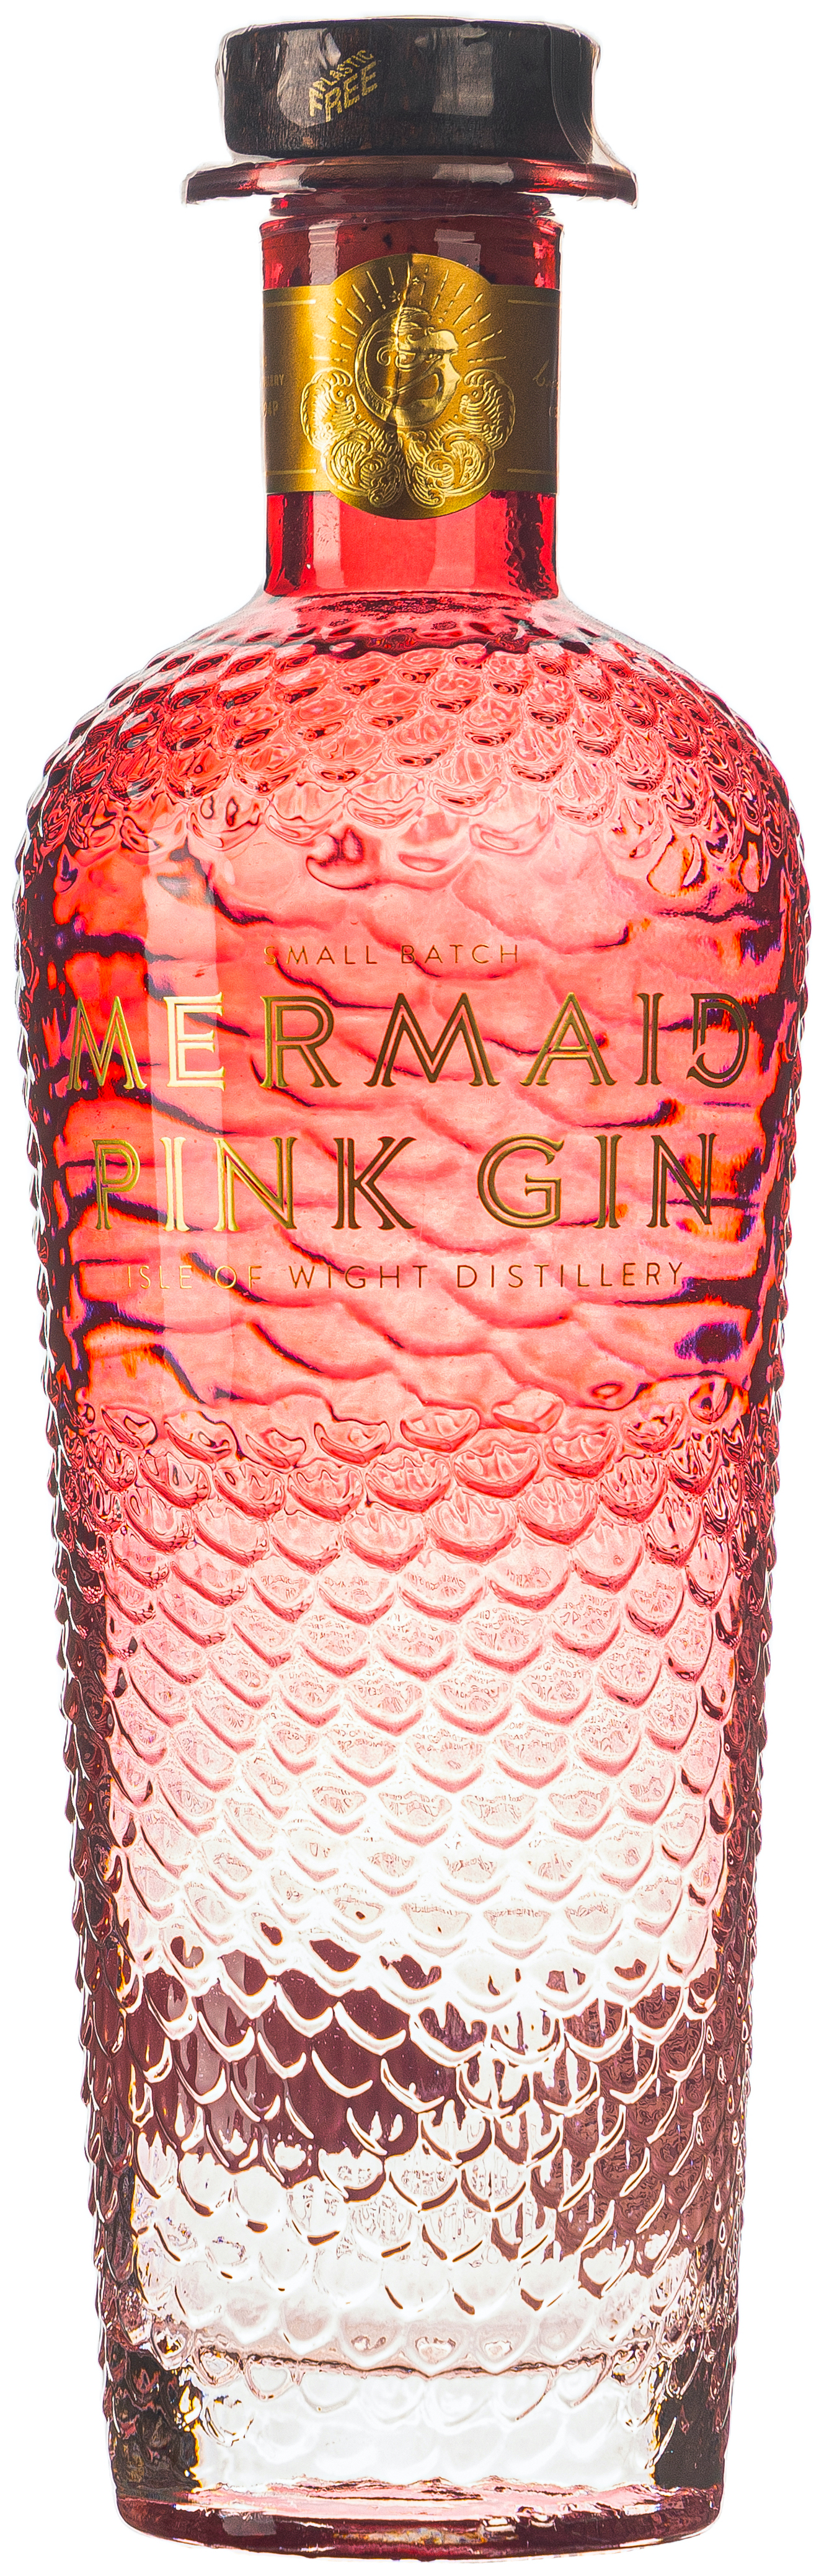 Mermaid Pink Gin 38% vol. 0,7L 